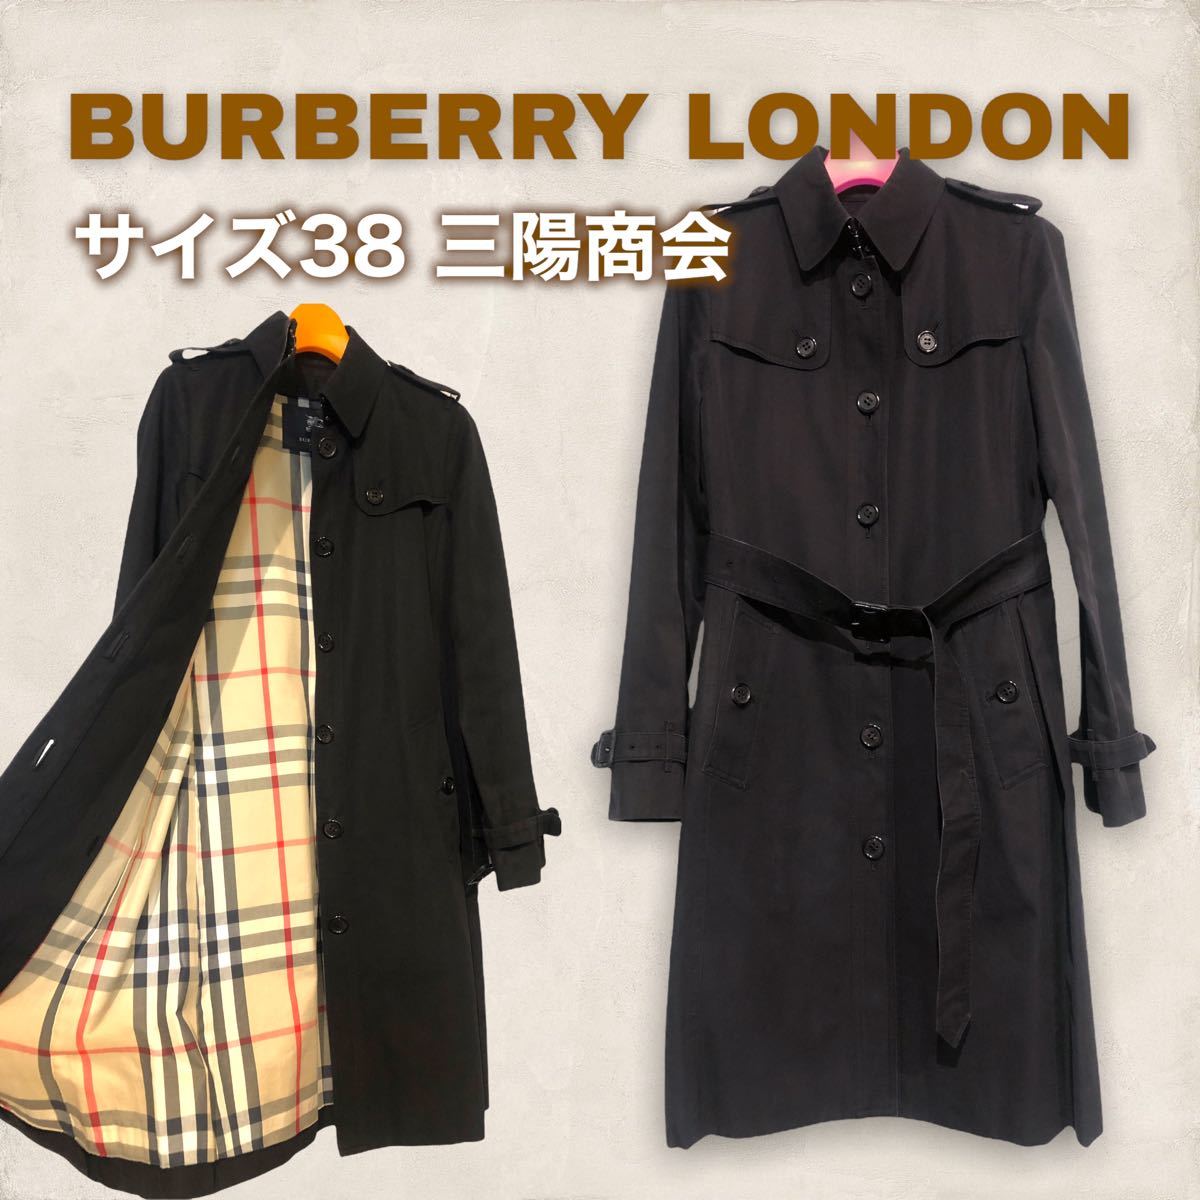 Burberry London コート 未使用新品 steelpier.com